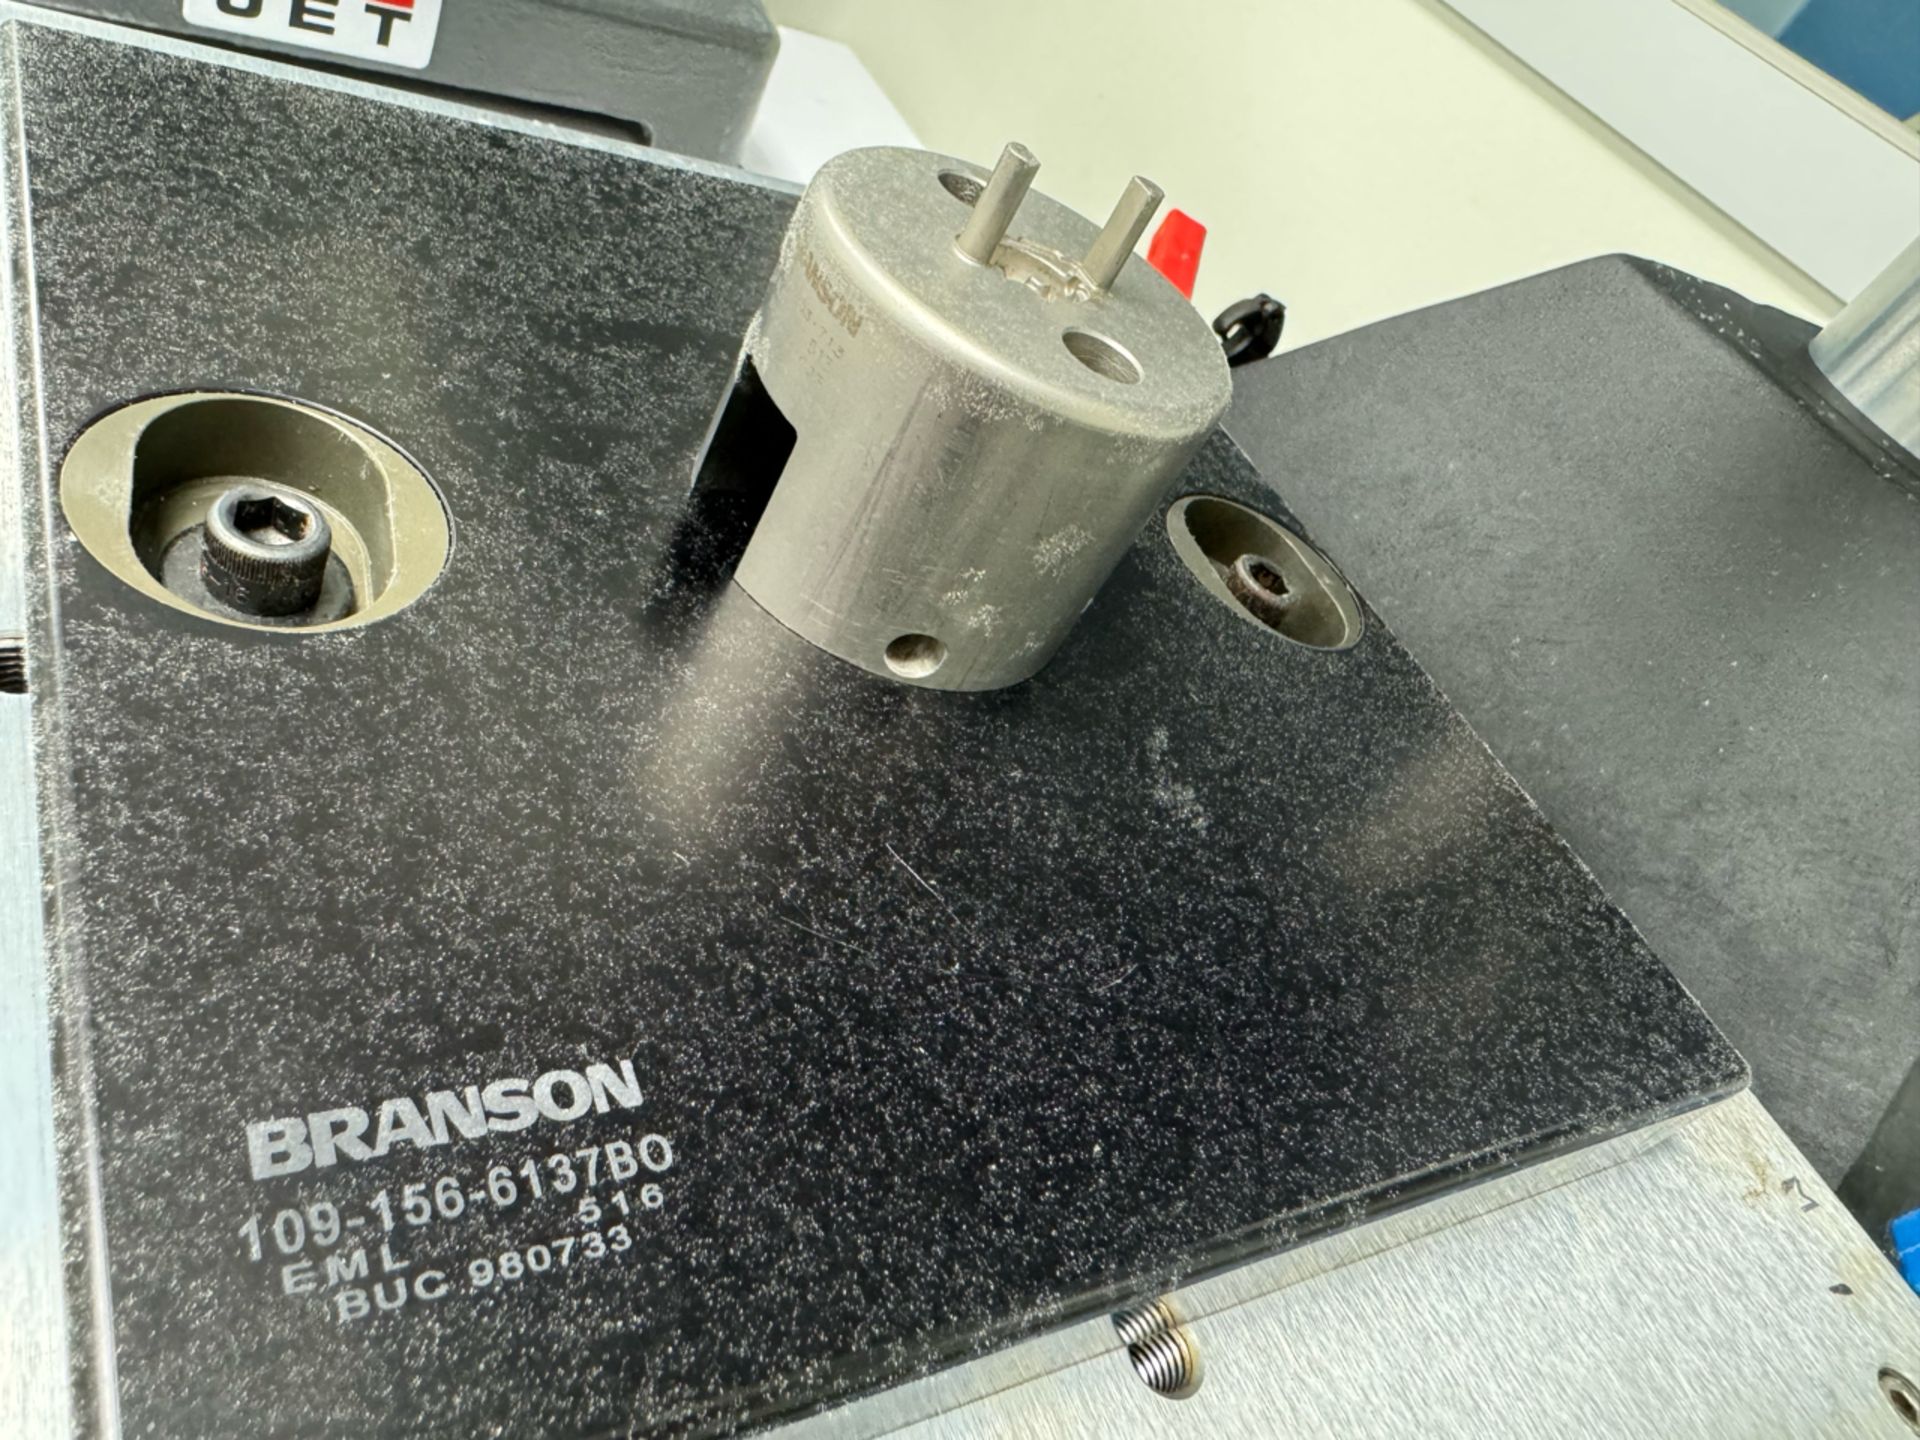 Branson 2000x Ultrasonic Welder - Image 4 of 11